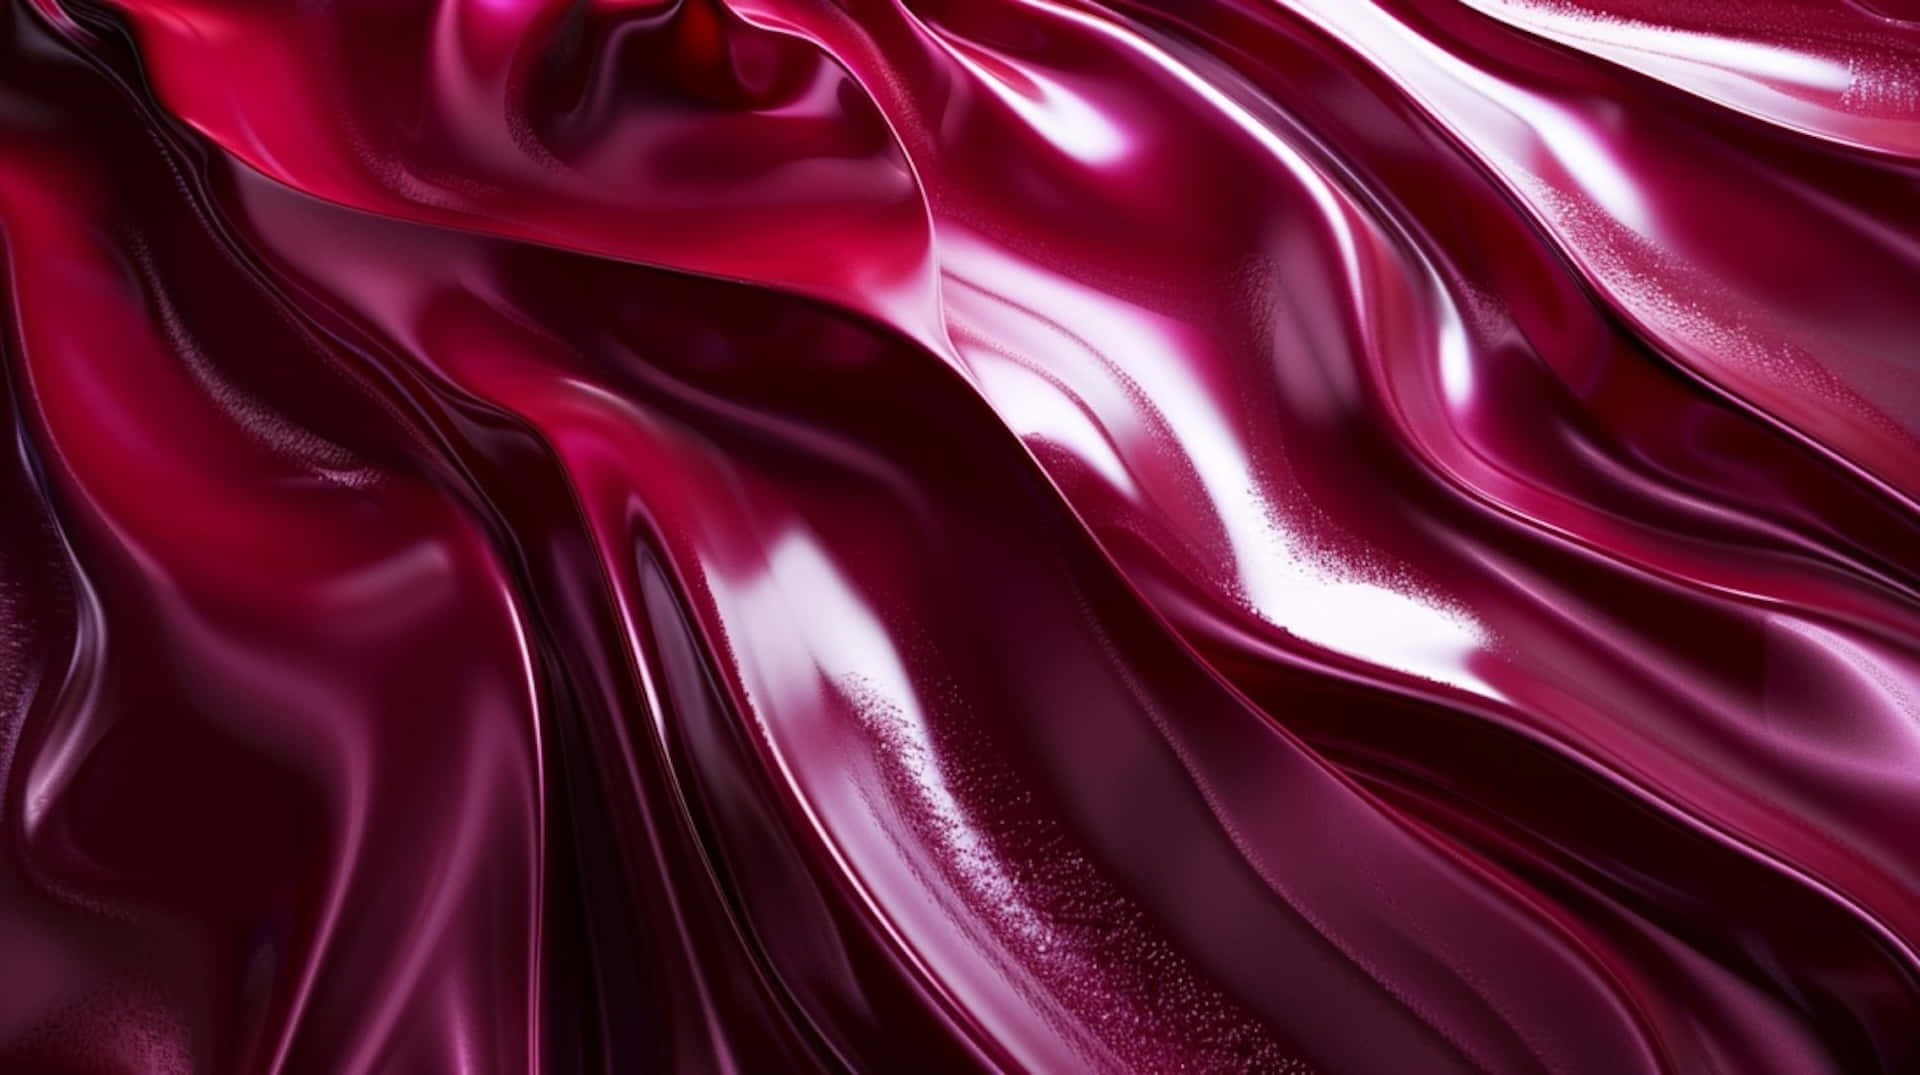 Abstract Burgundy Waves Texture Wallpaper